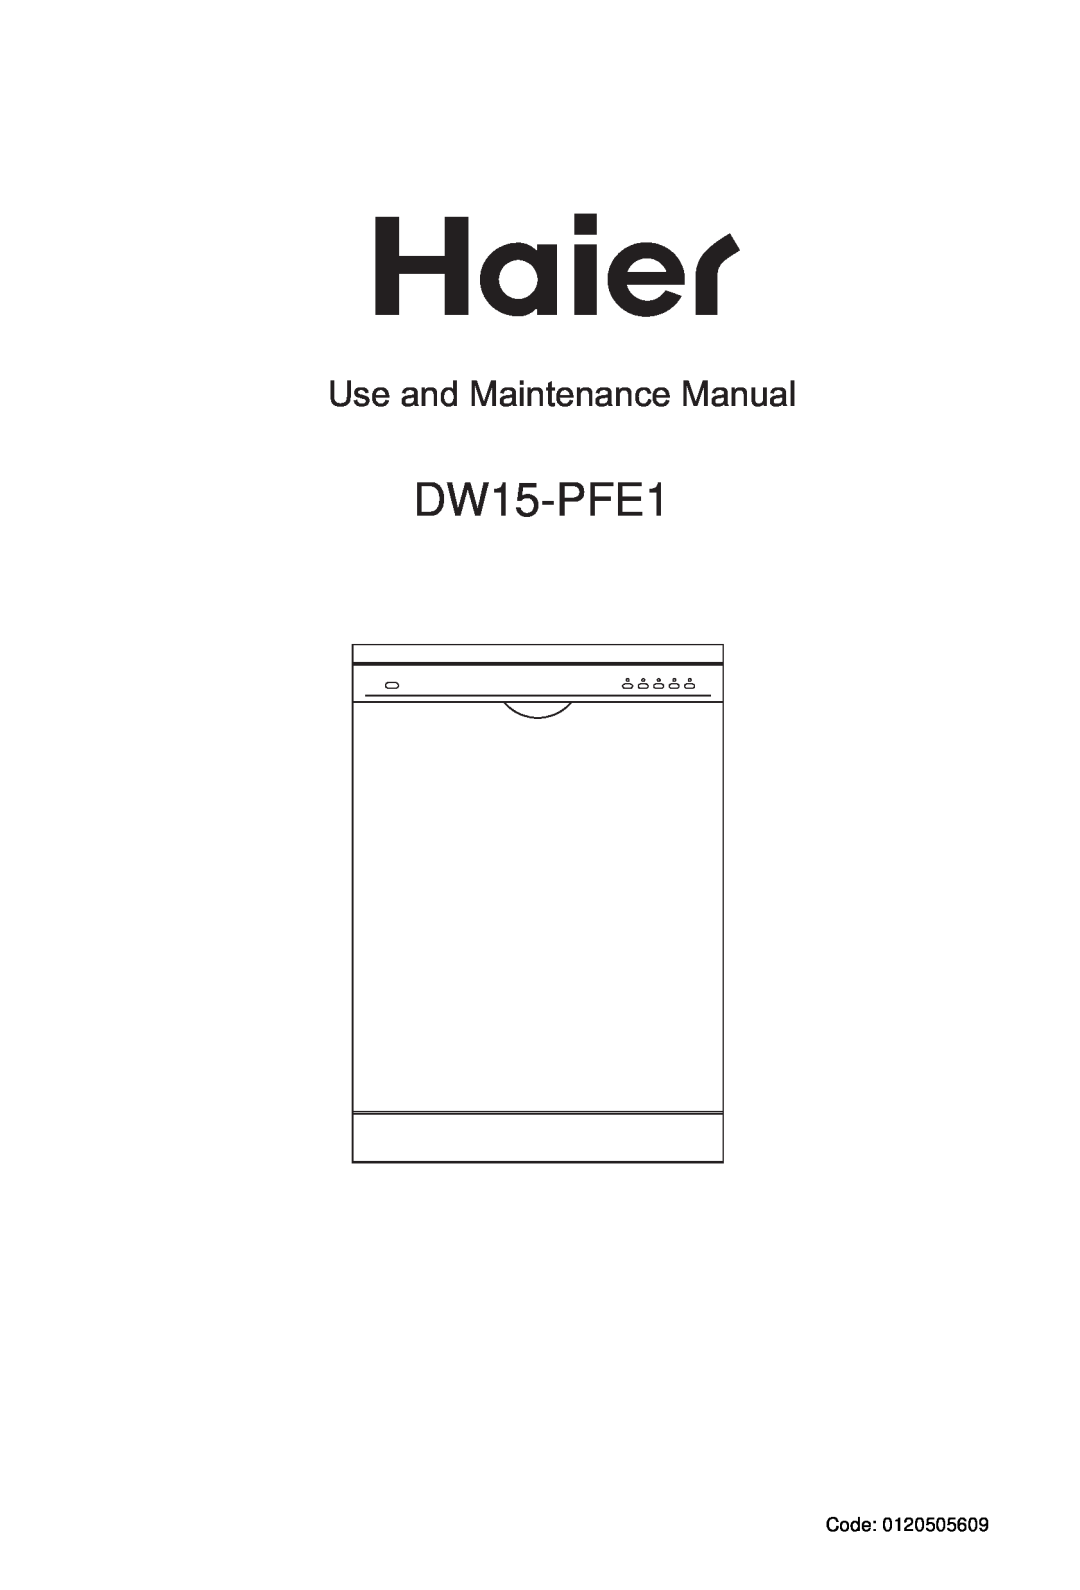 Haier 0120505609 manual DW15-PFE1, Use and Maintenance Manual 